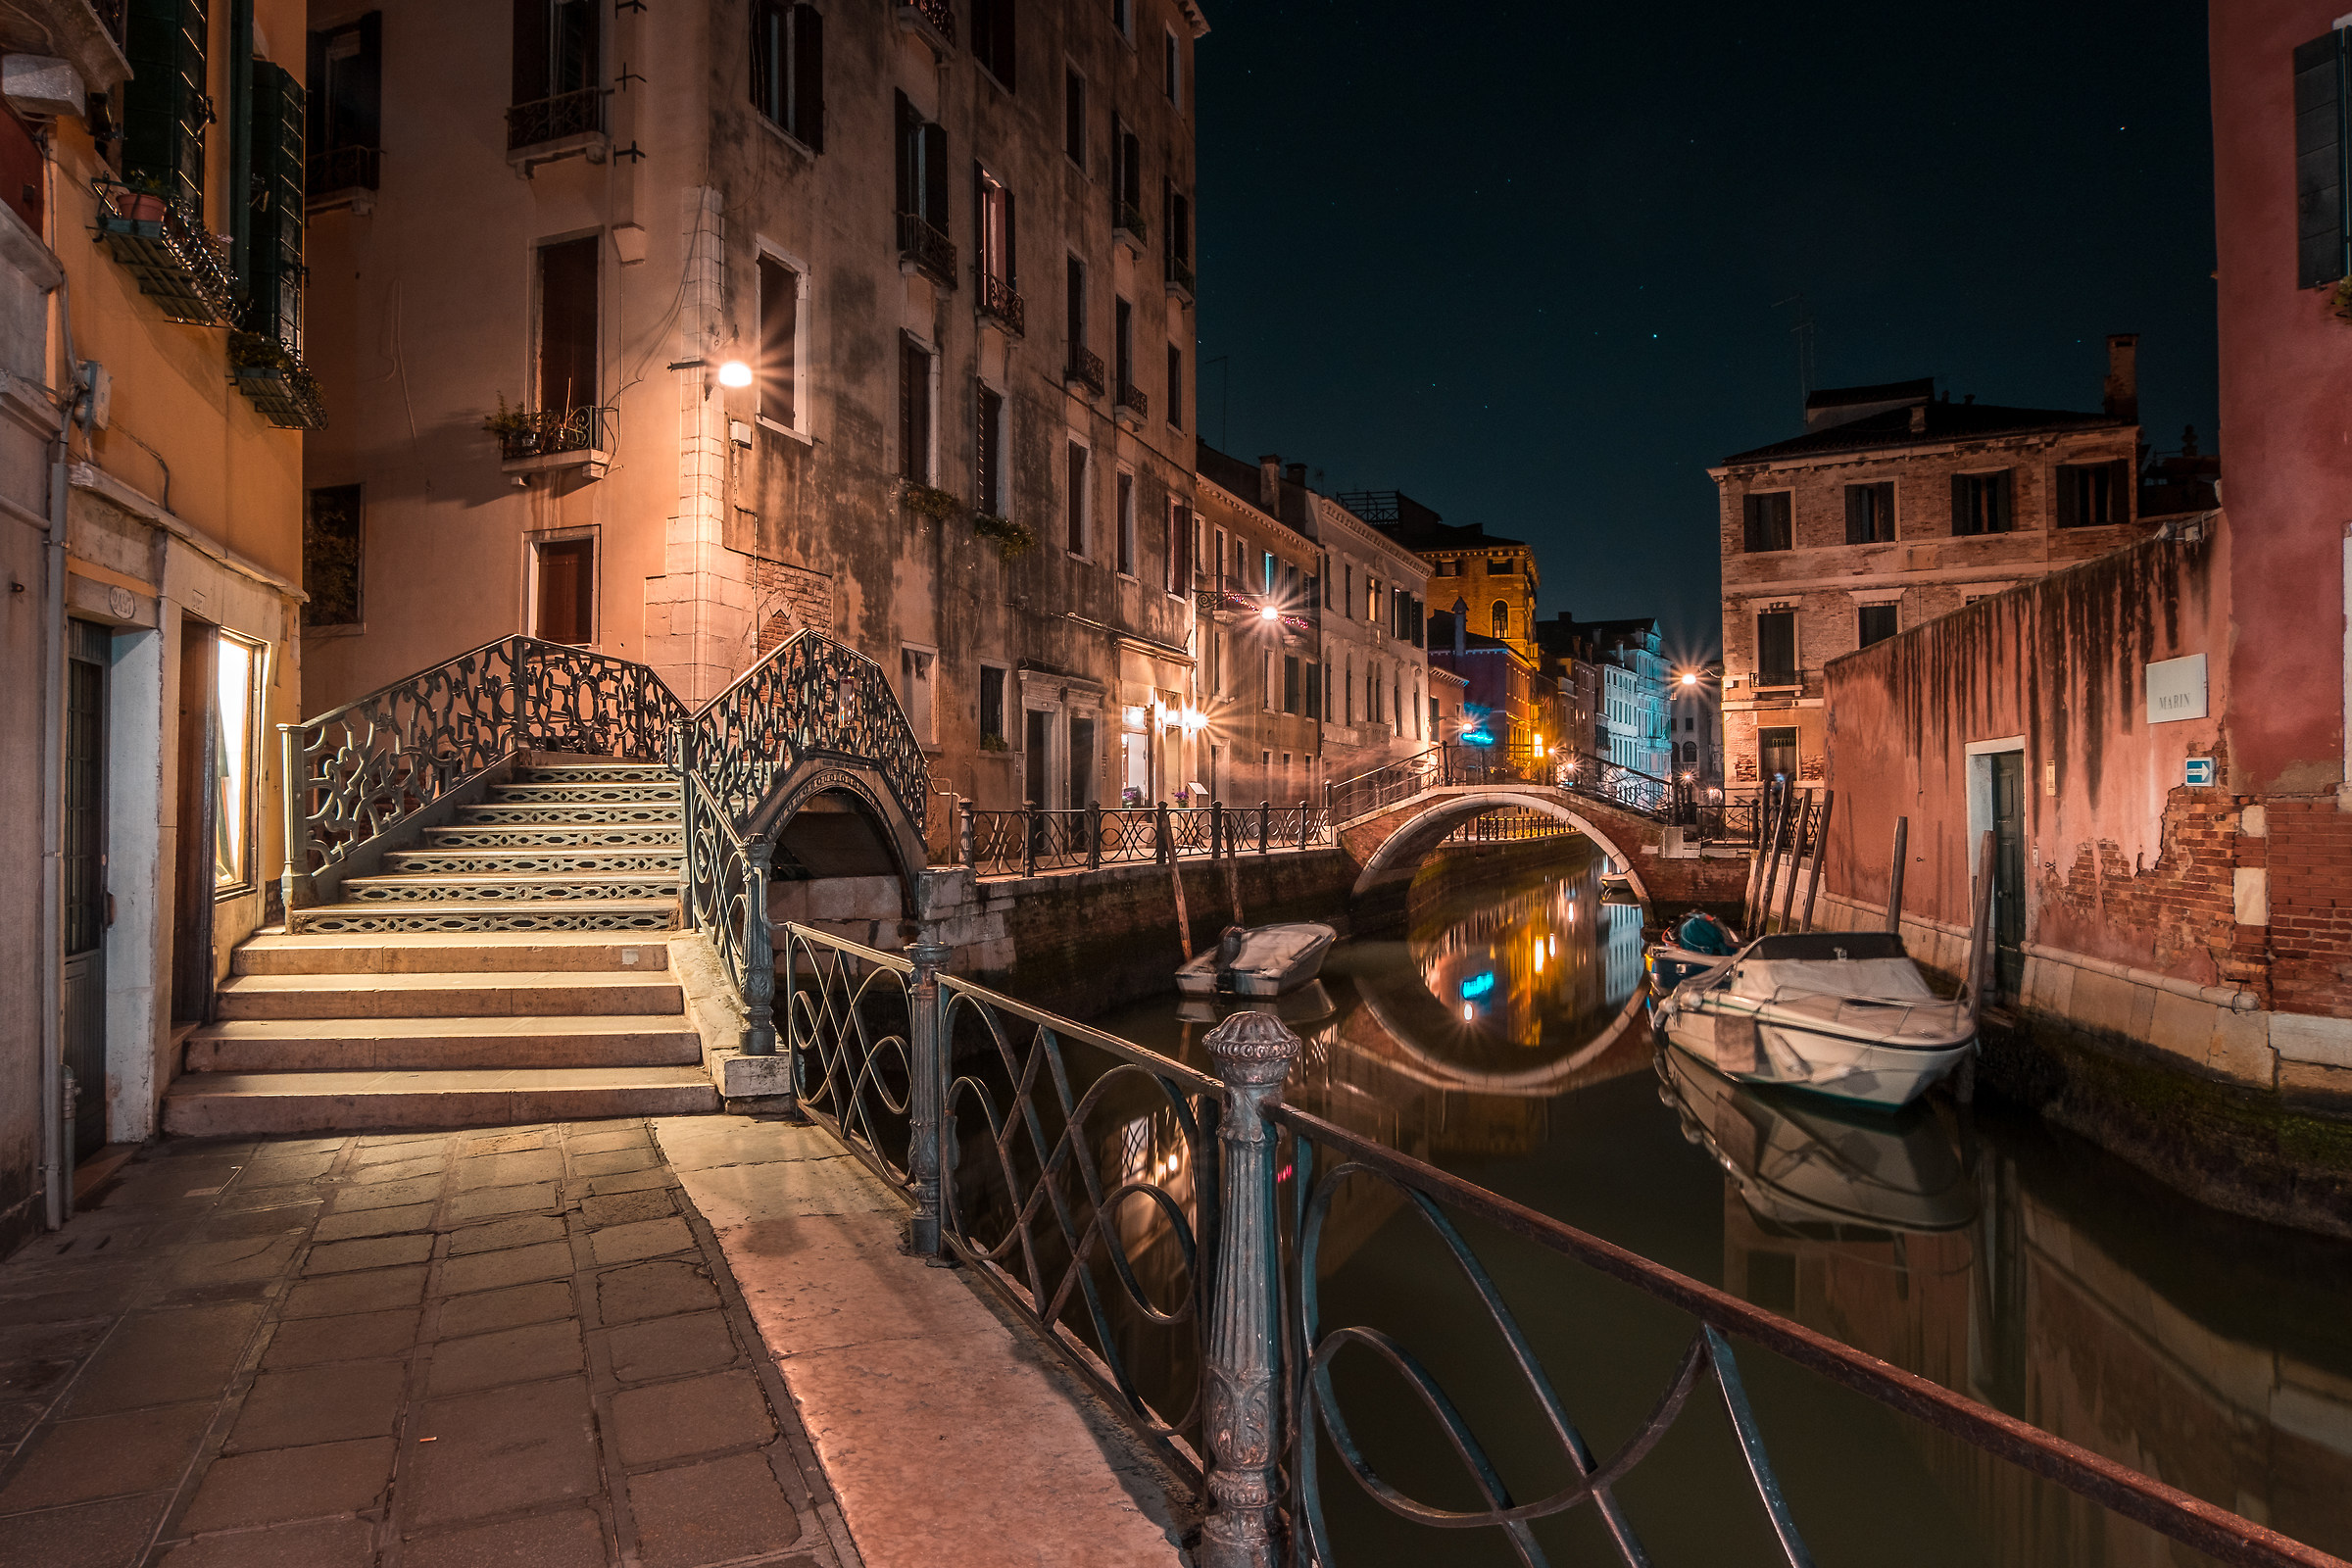 Bridges of Venice ......